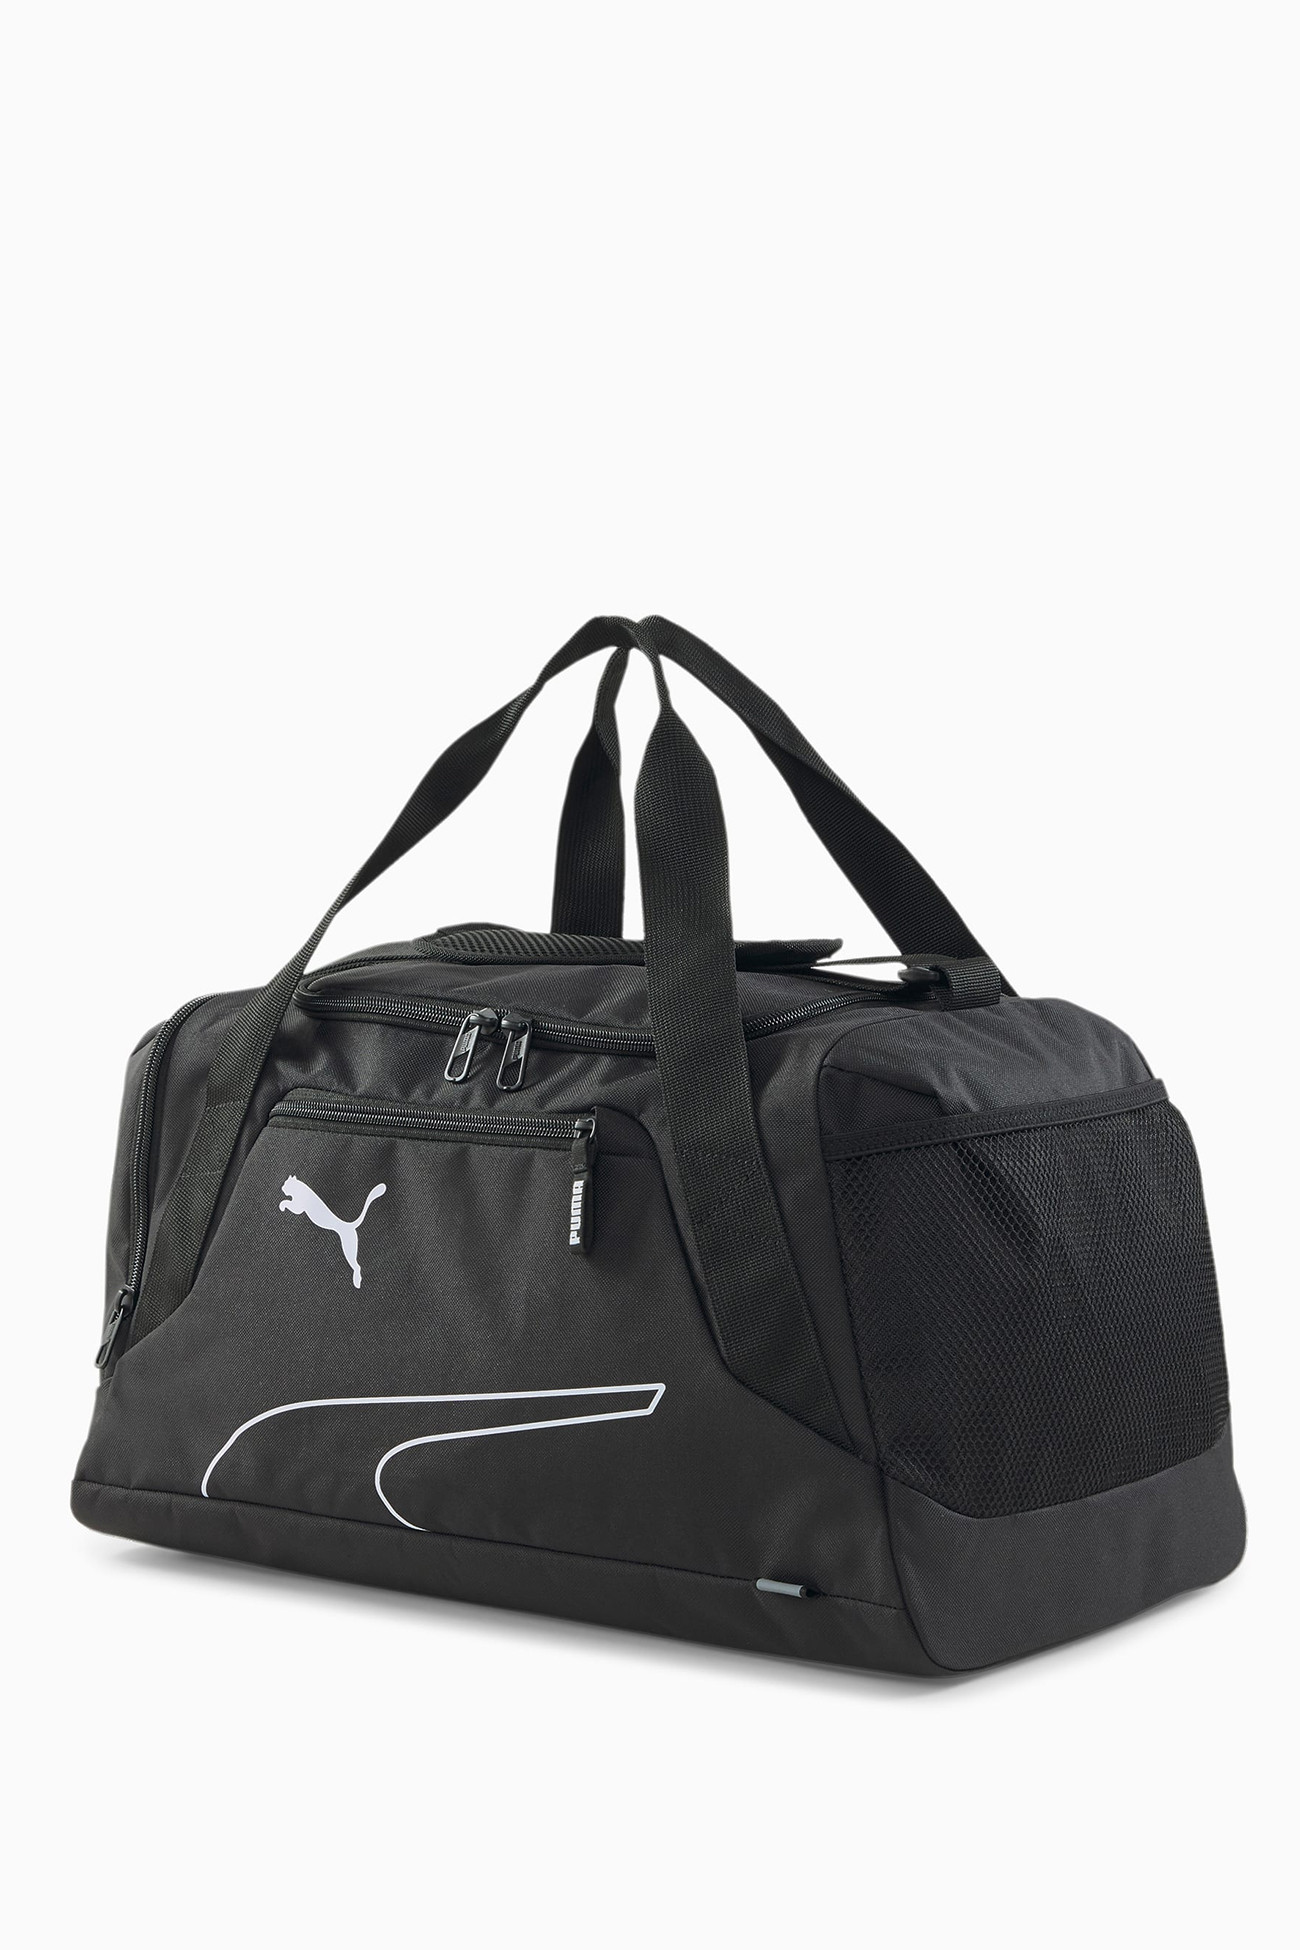 Сумка  Puma Fundamentals Sports Bag S чорна 07923001 изображение 2